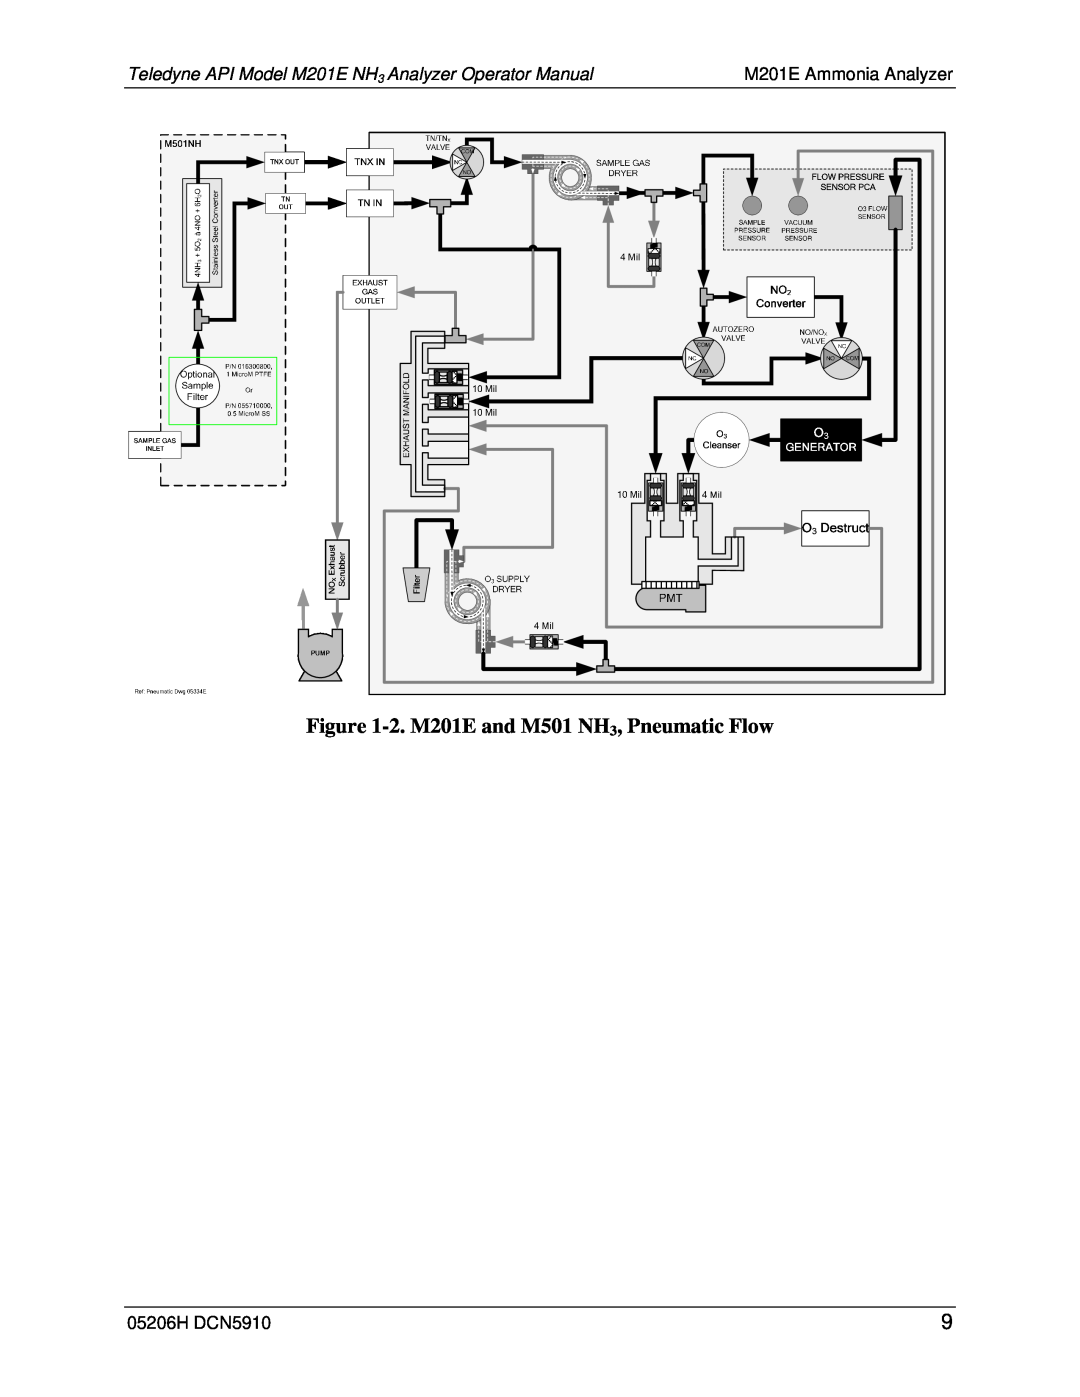 Teledyne manual 2.M201E and M501 NH3, Pneumatic Flow, M201E Ammonia Analyzer, 05206H DCN5910 